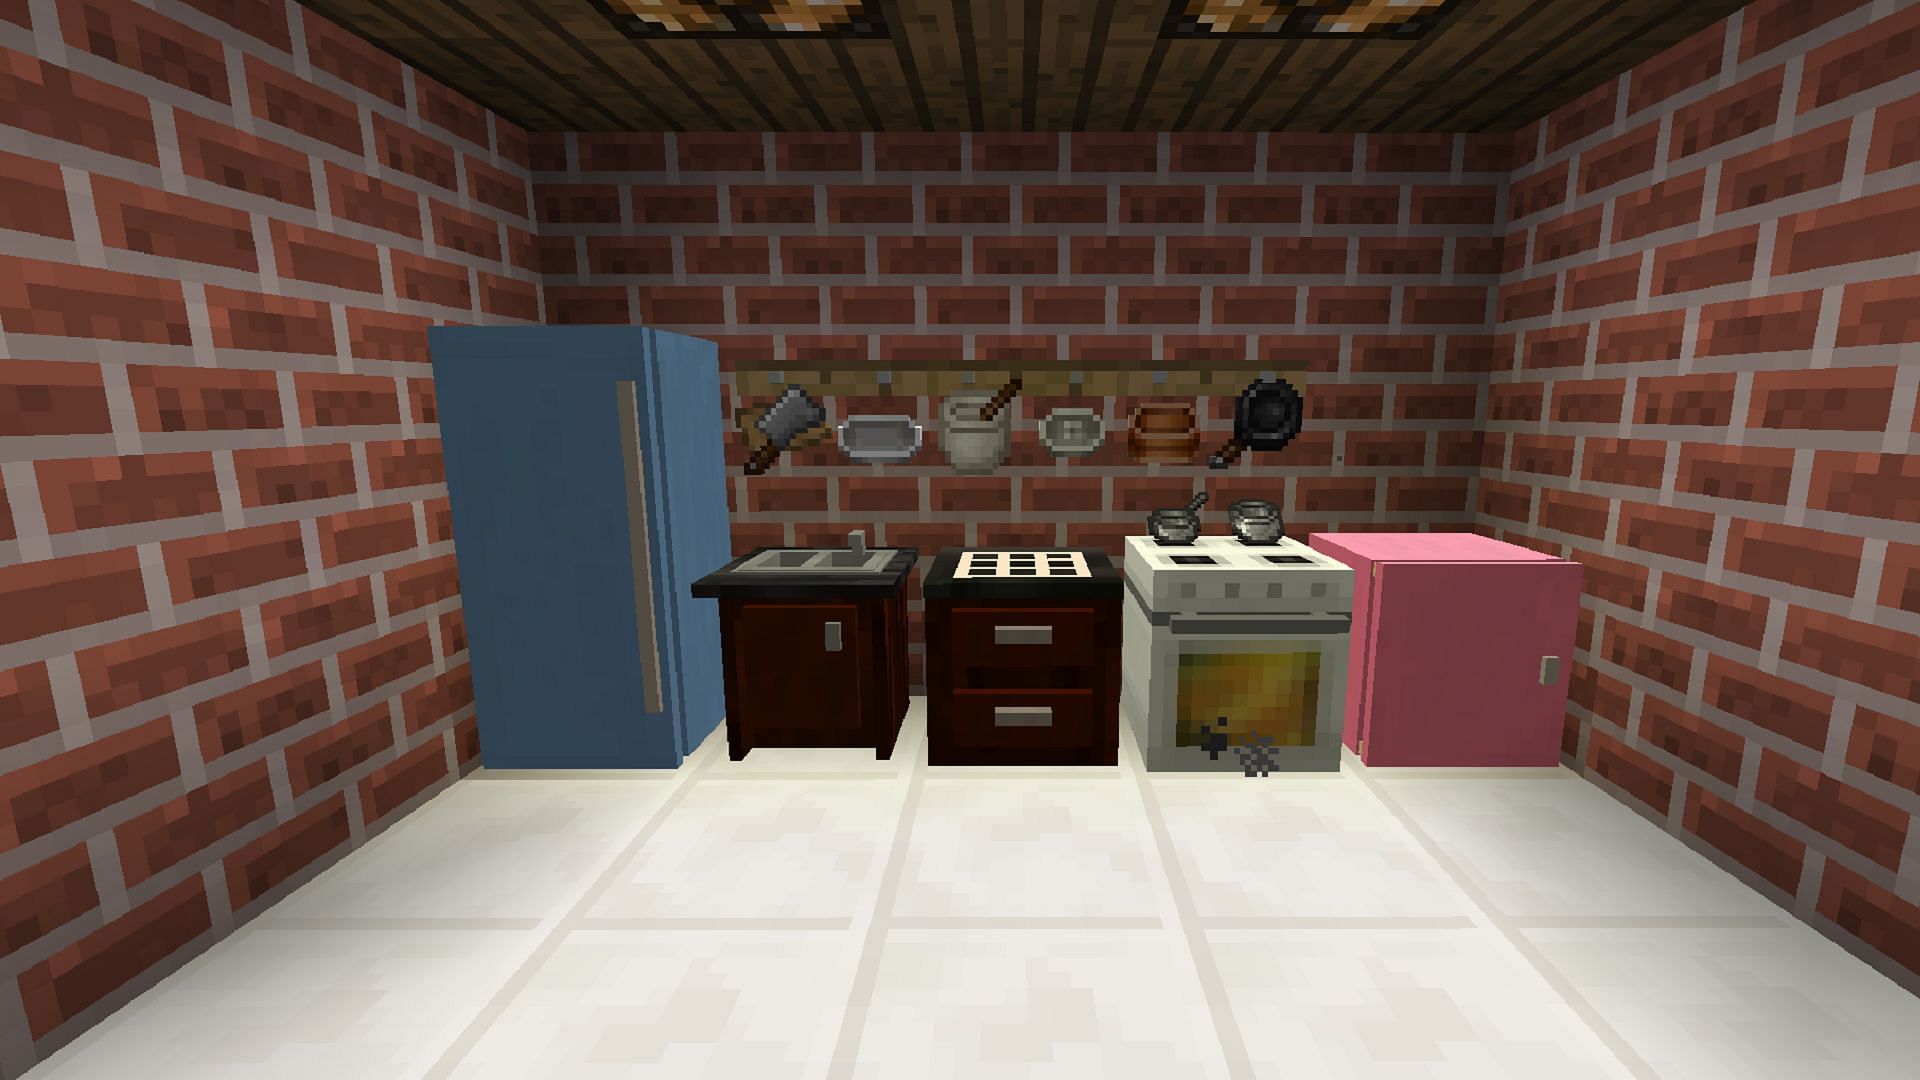 A multi-block kitchen provided in Minecraft